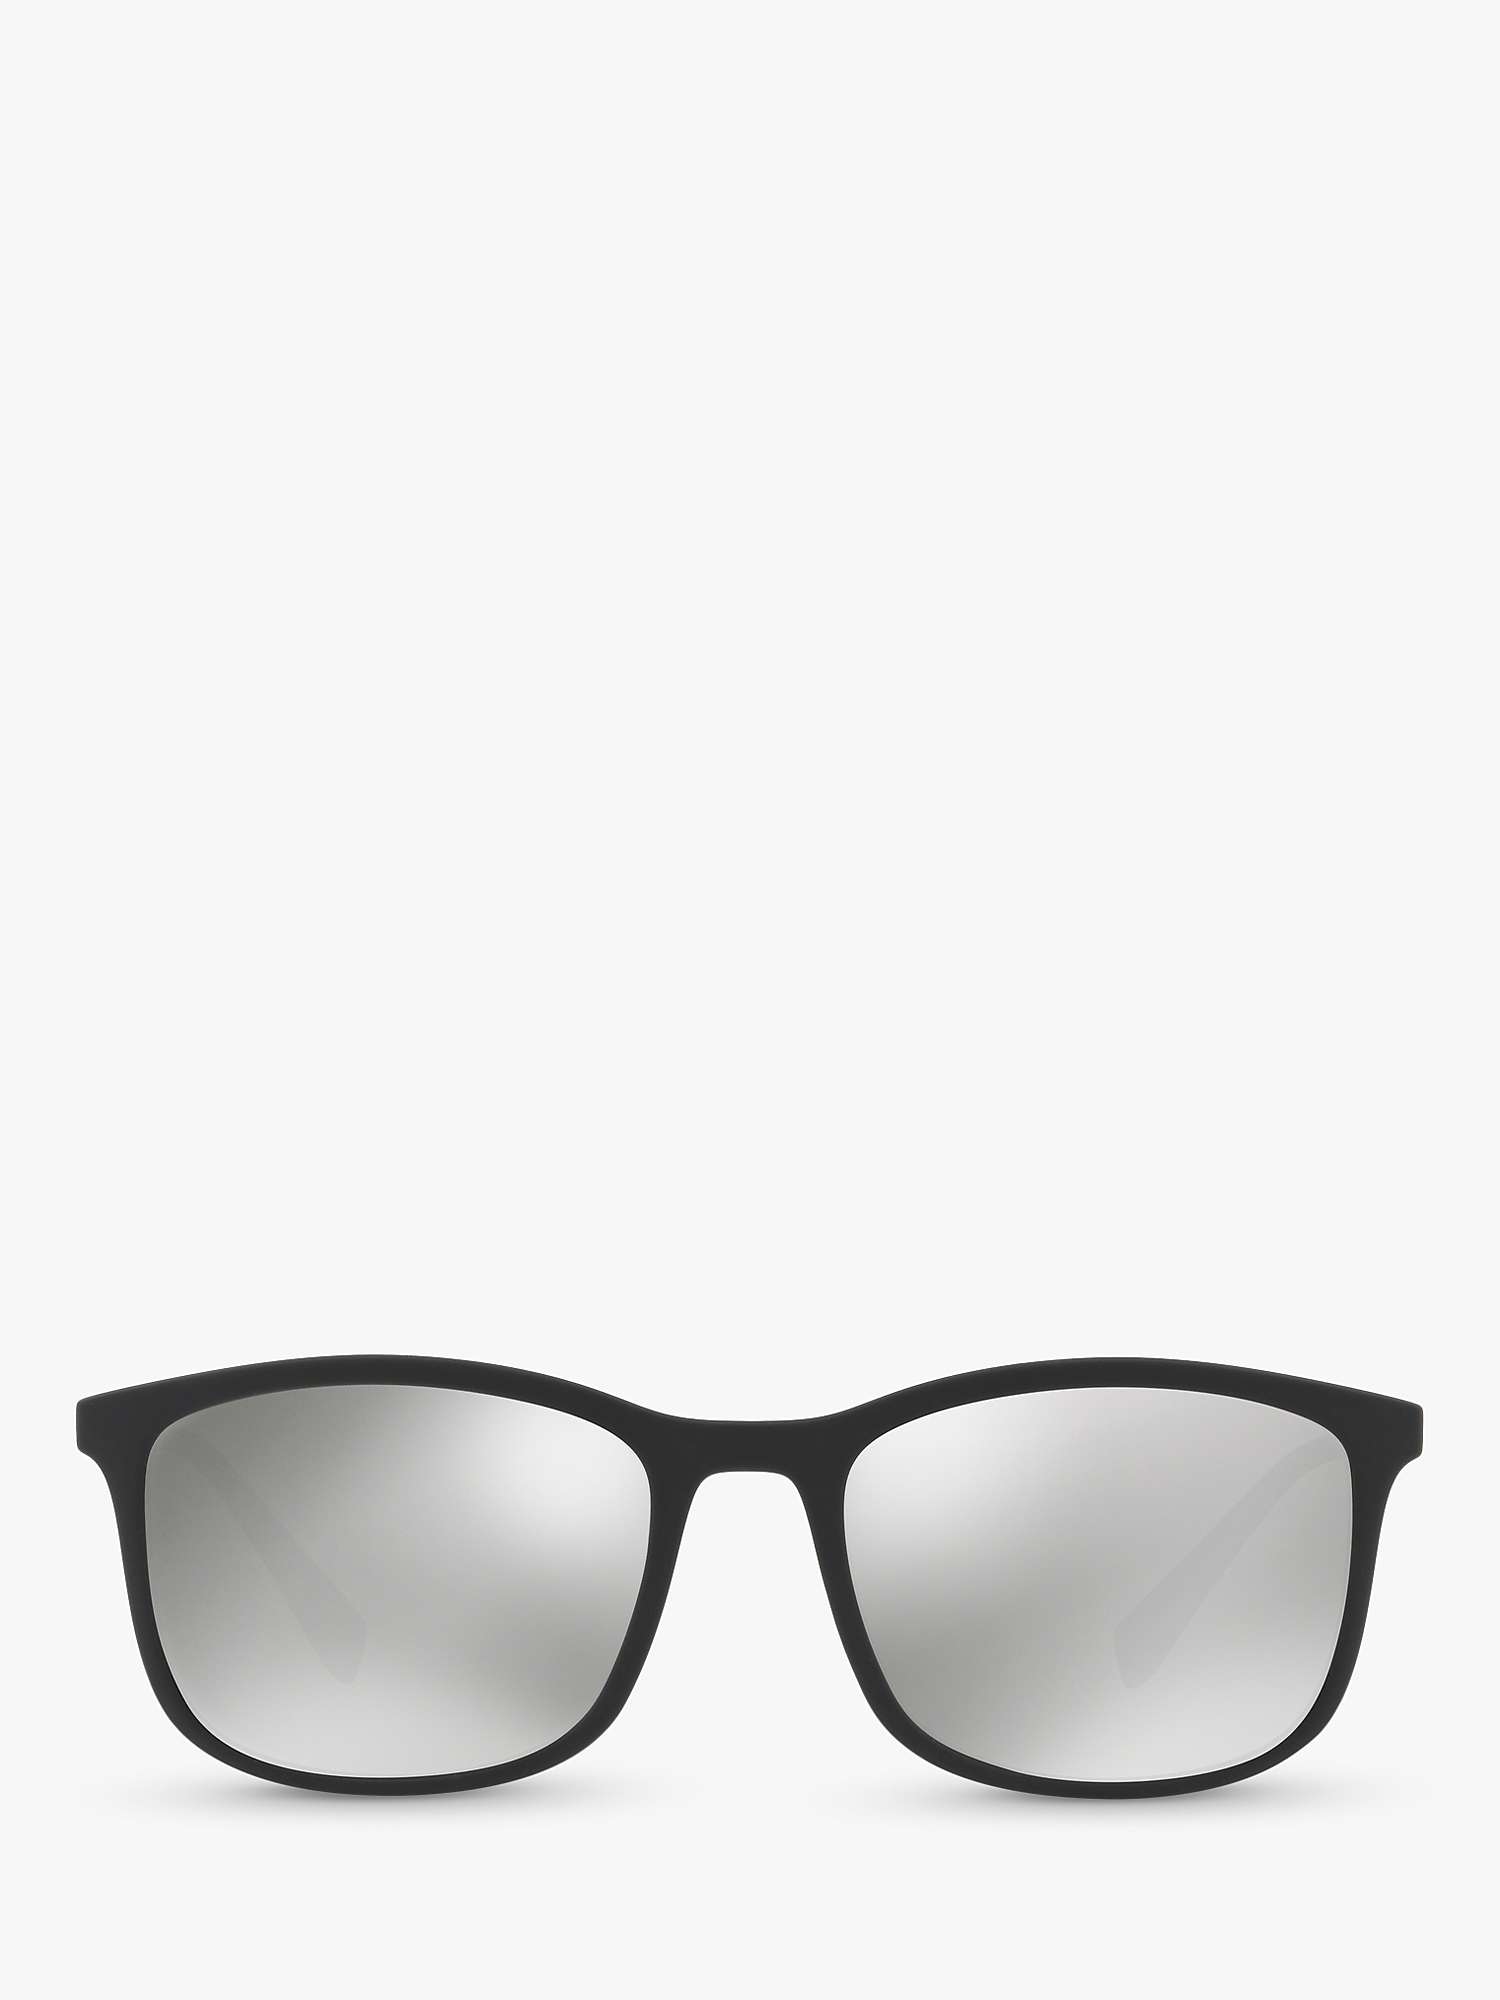 Buy Prada Linea Rossa PS 01TS Men's Rectangular Sunglasses, Black/Mirror Grey Online at johnlewis.com